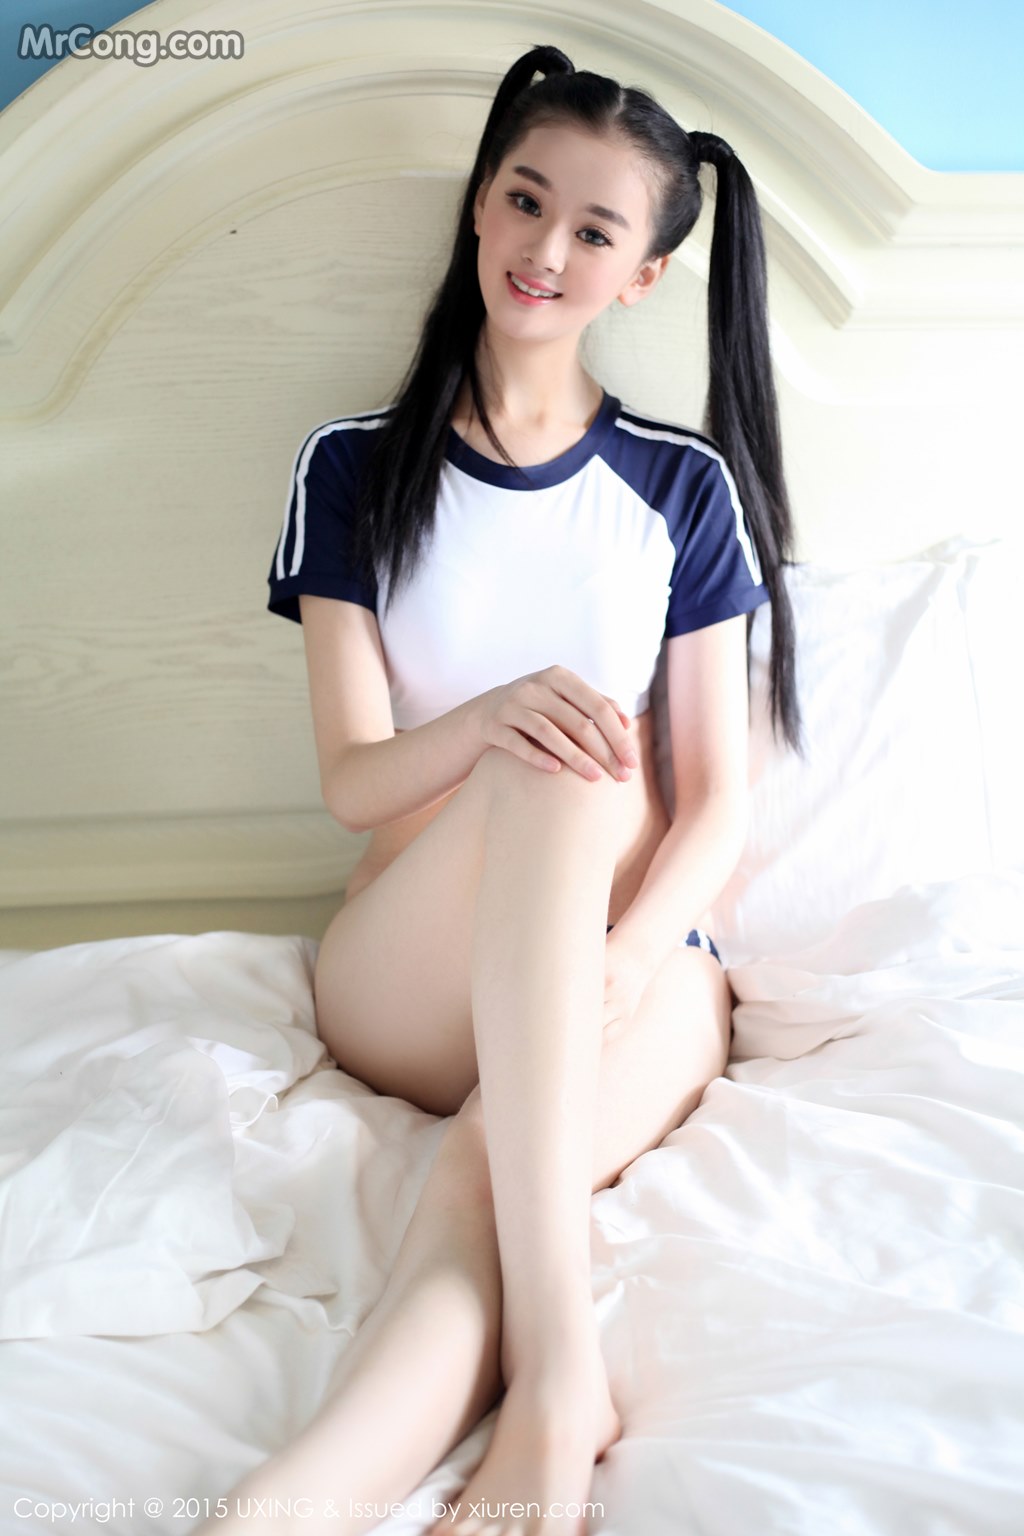 UXING Vol.027: Model Wen Xin Baby (温馨 baby) (45 pictures) photo 1-5